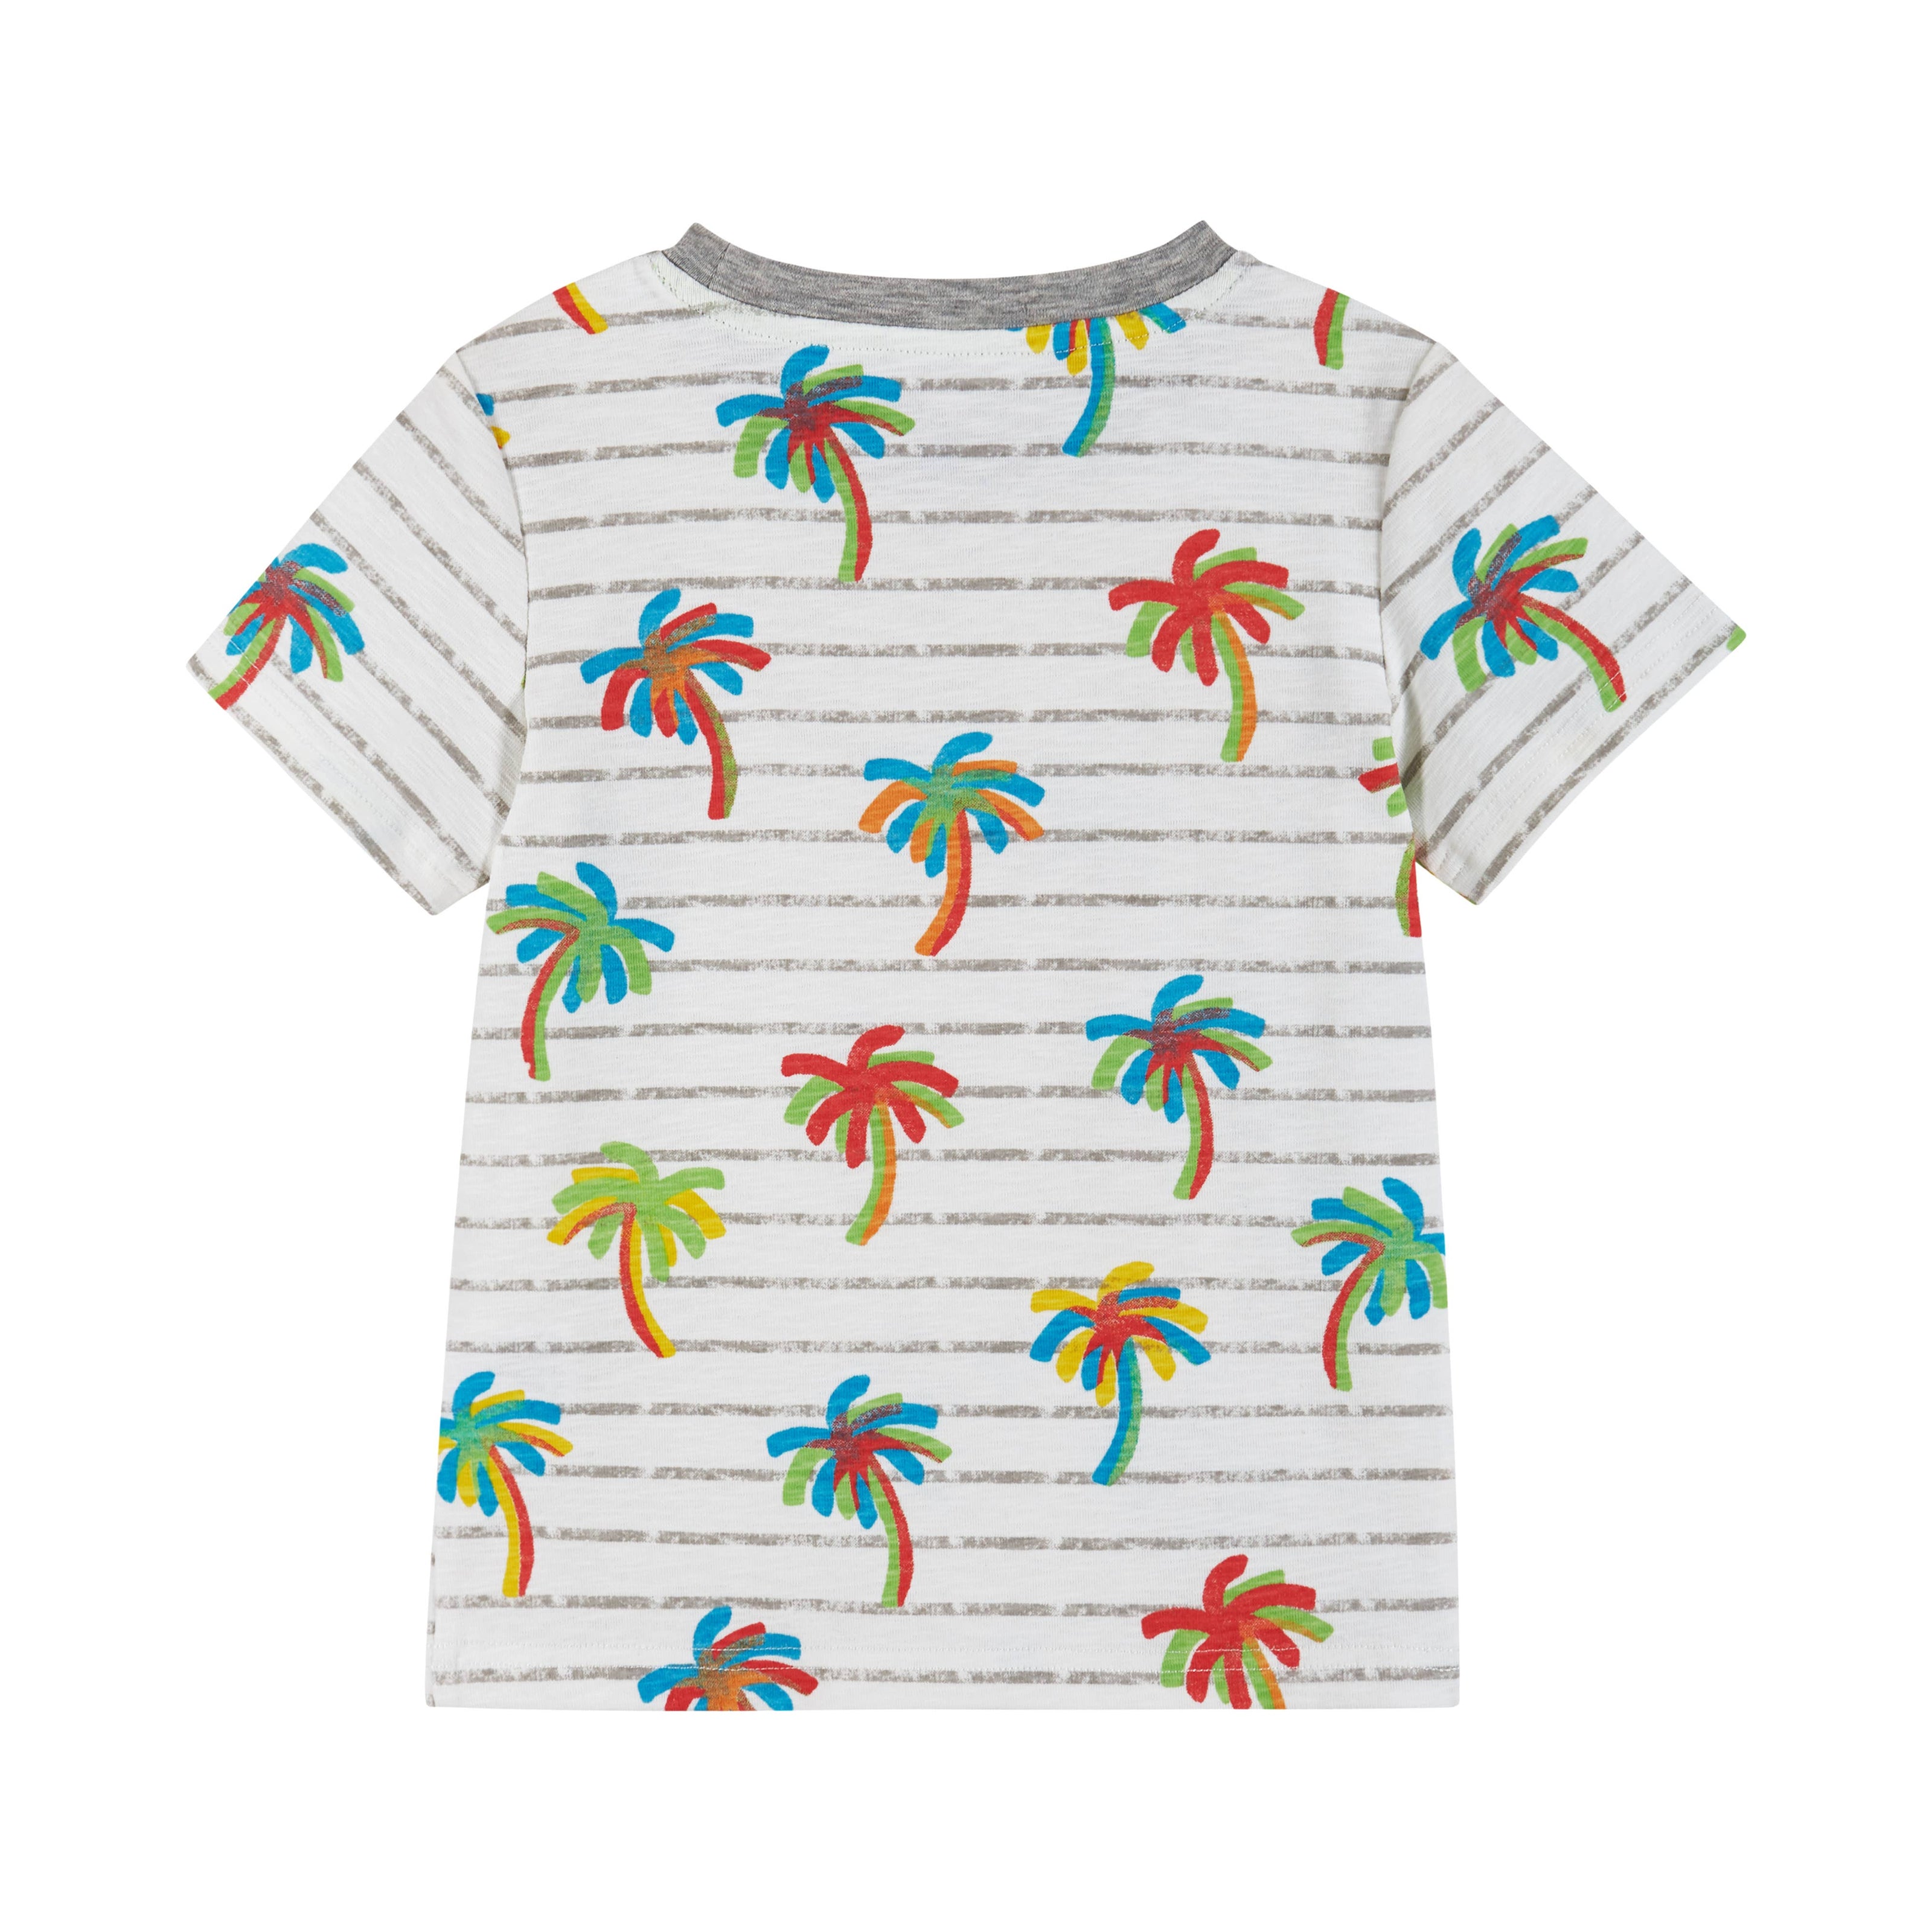 Boys Toddler Short Sleeve White Palm Printed Tee Shirt